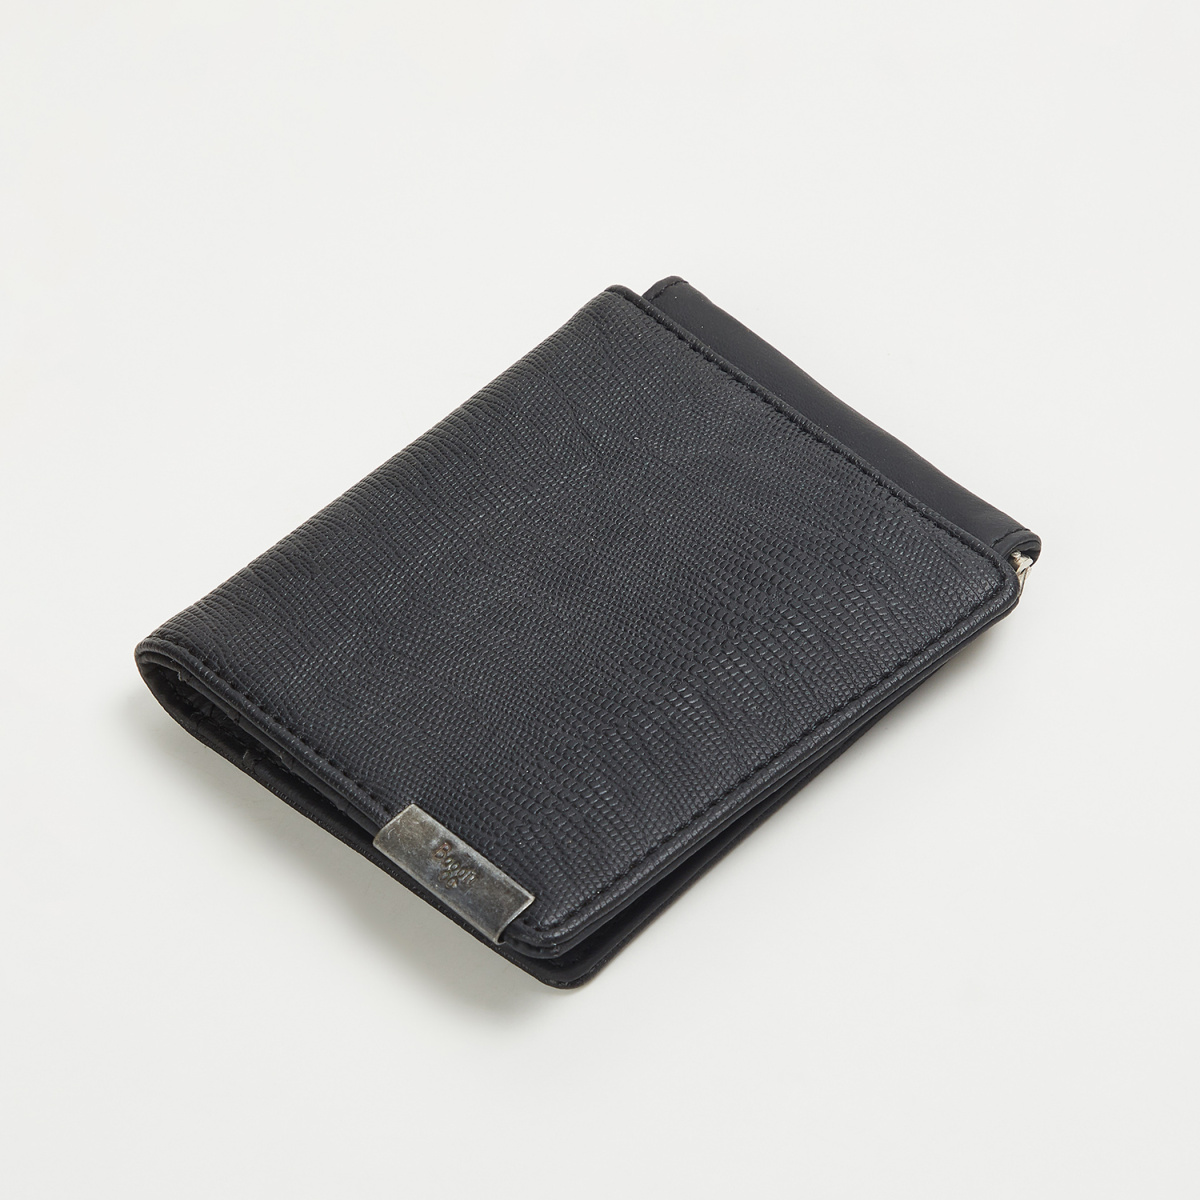 BAGGIT Men Textured Bi-Fold Wallet